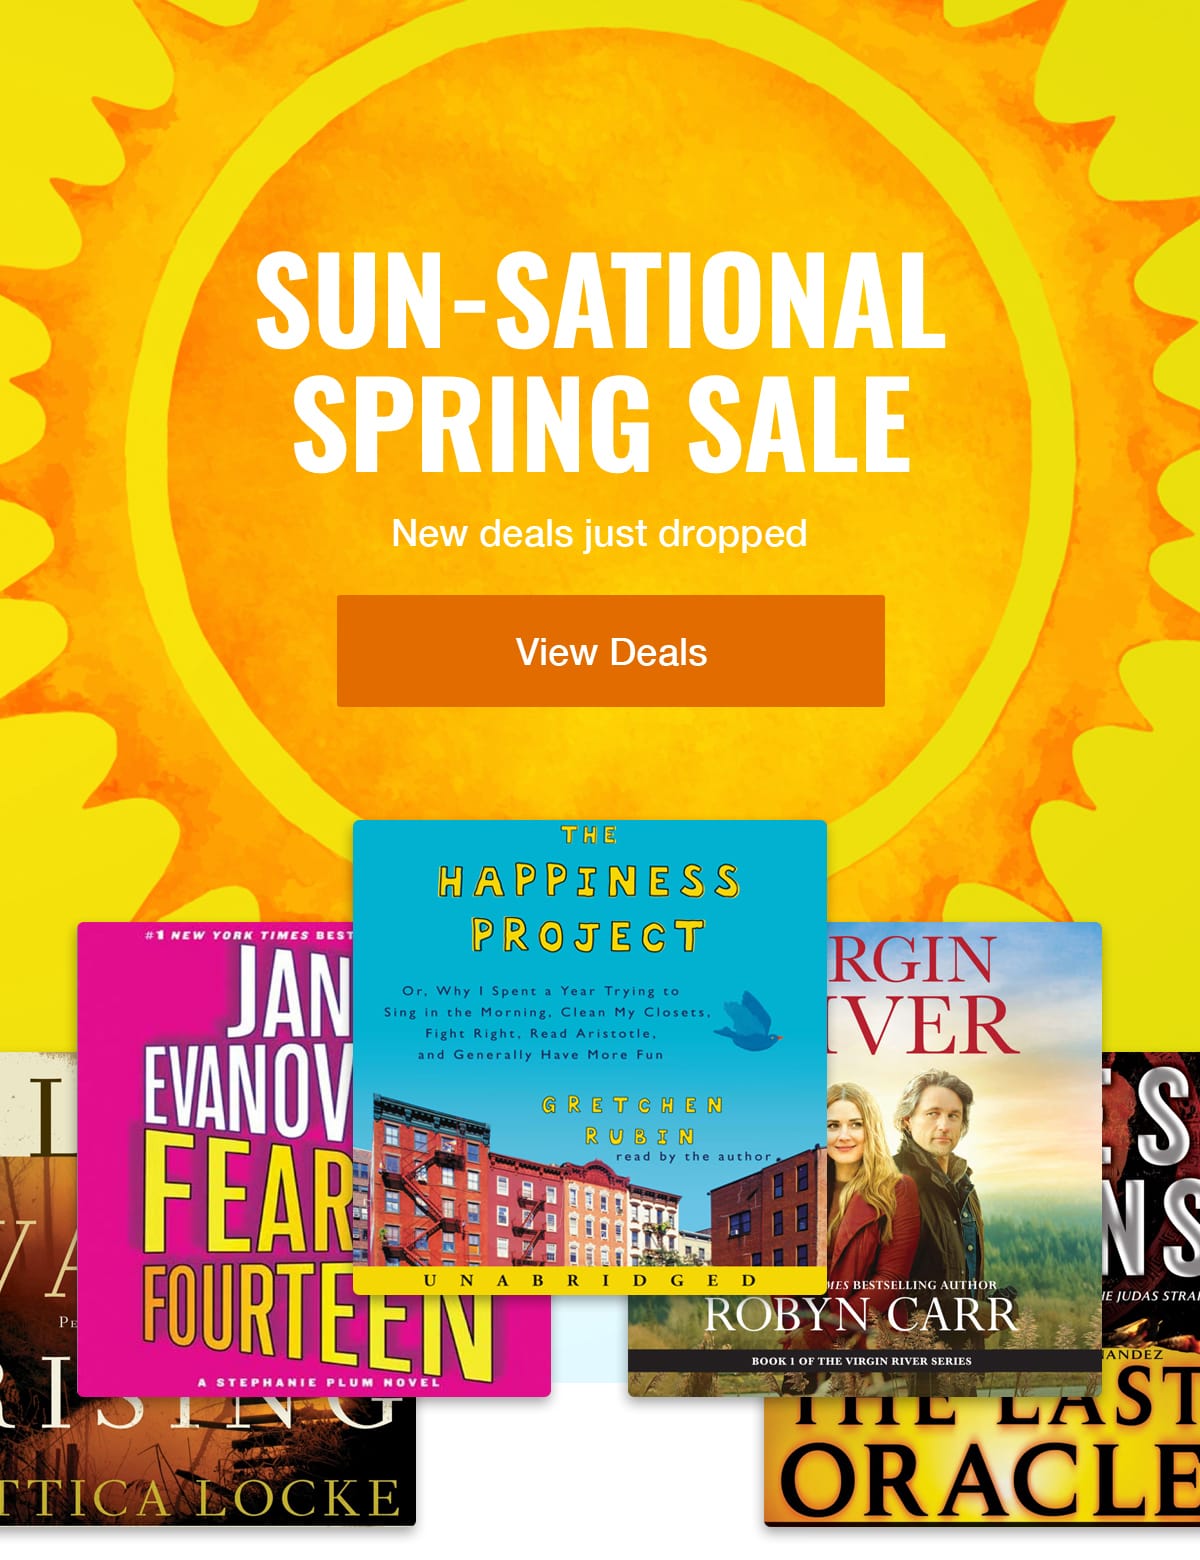 Sun-sational Spring Sale